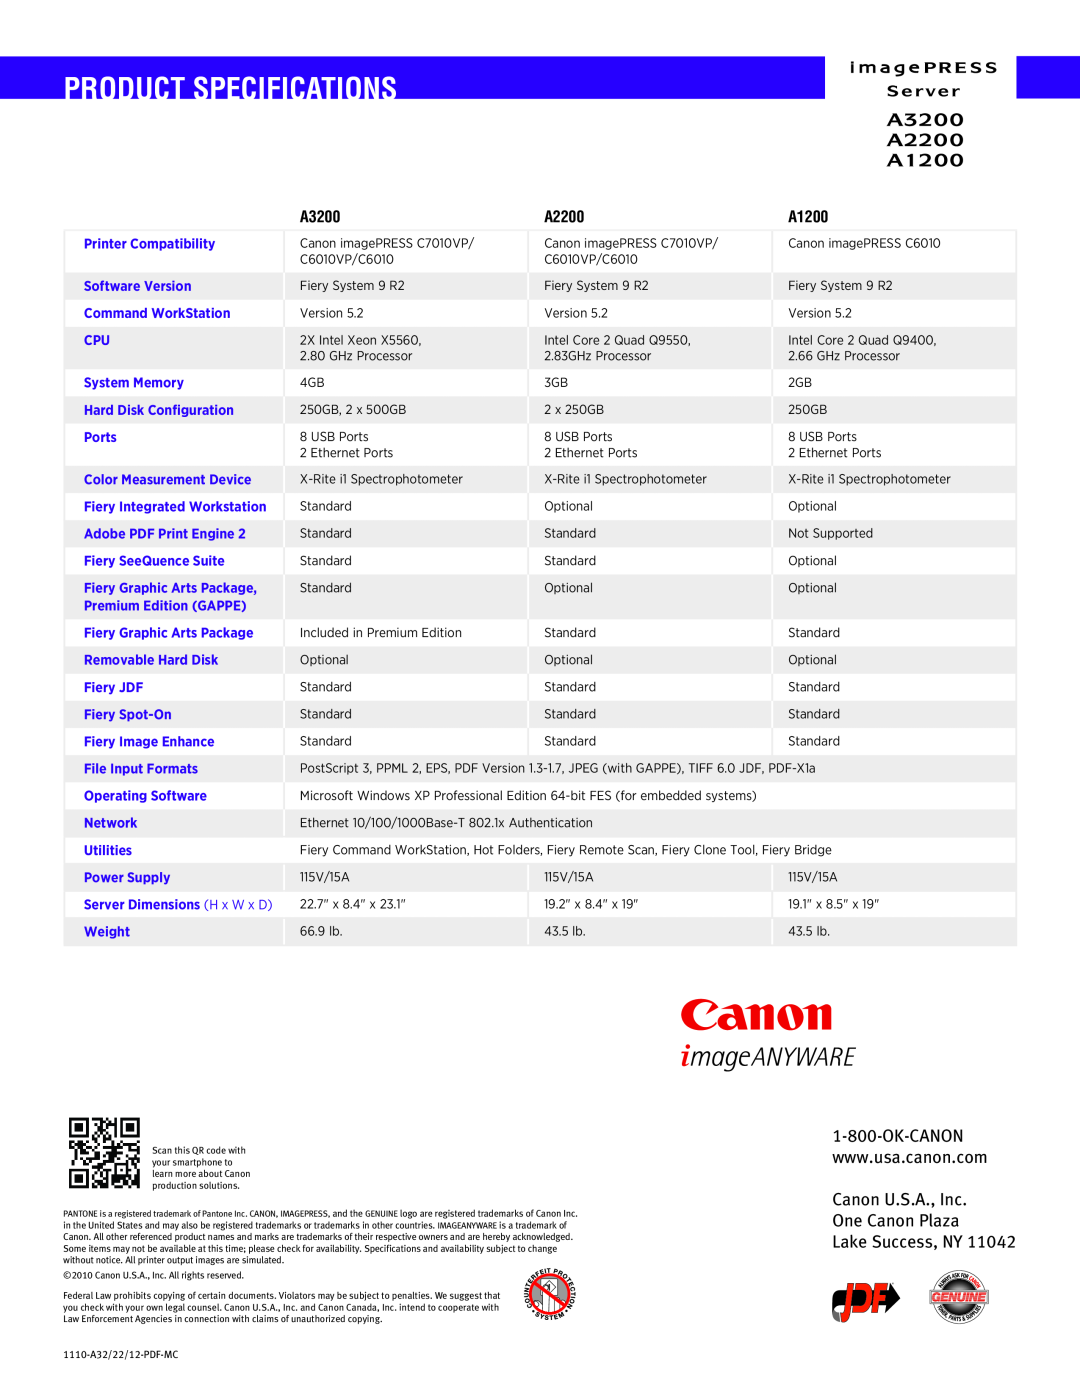 Canon A1200 manual Product Specifications, Canon U.S.A., Inc One Canon Plaza Lake Success, NY, A3200, A2200 